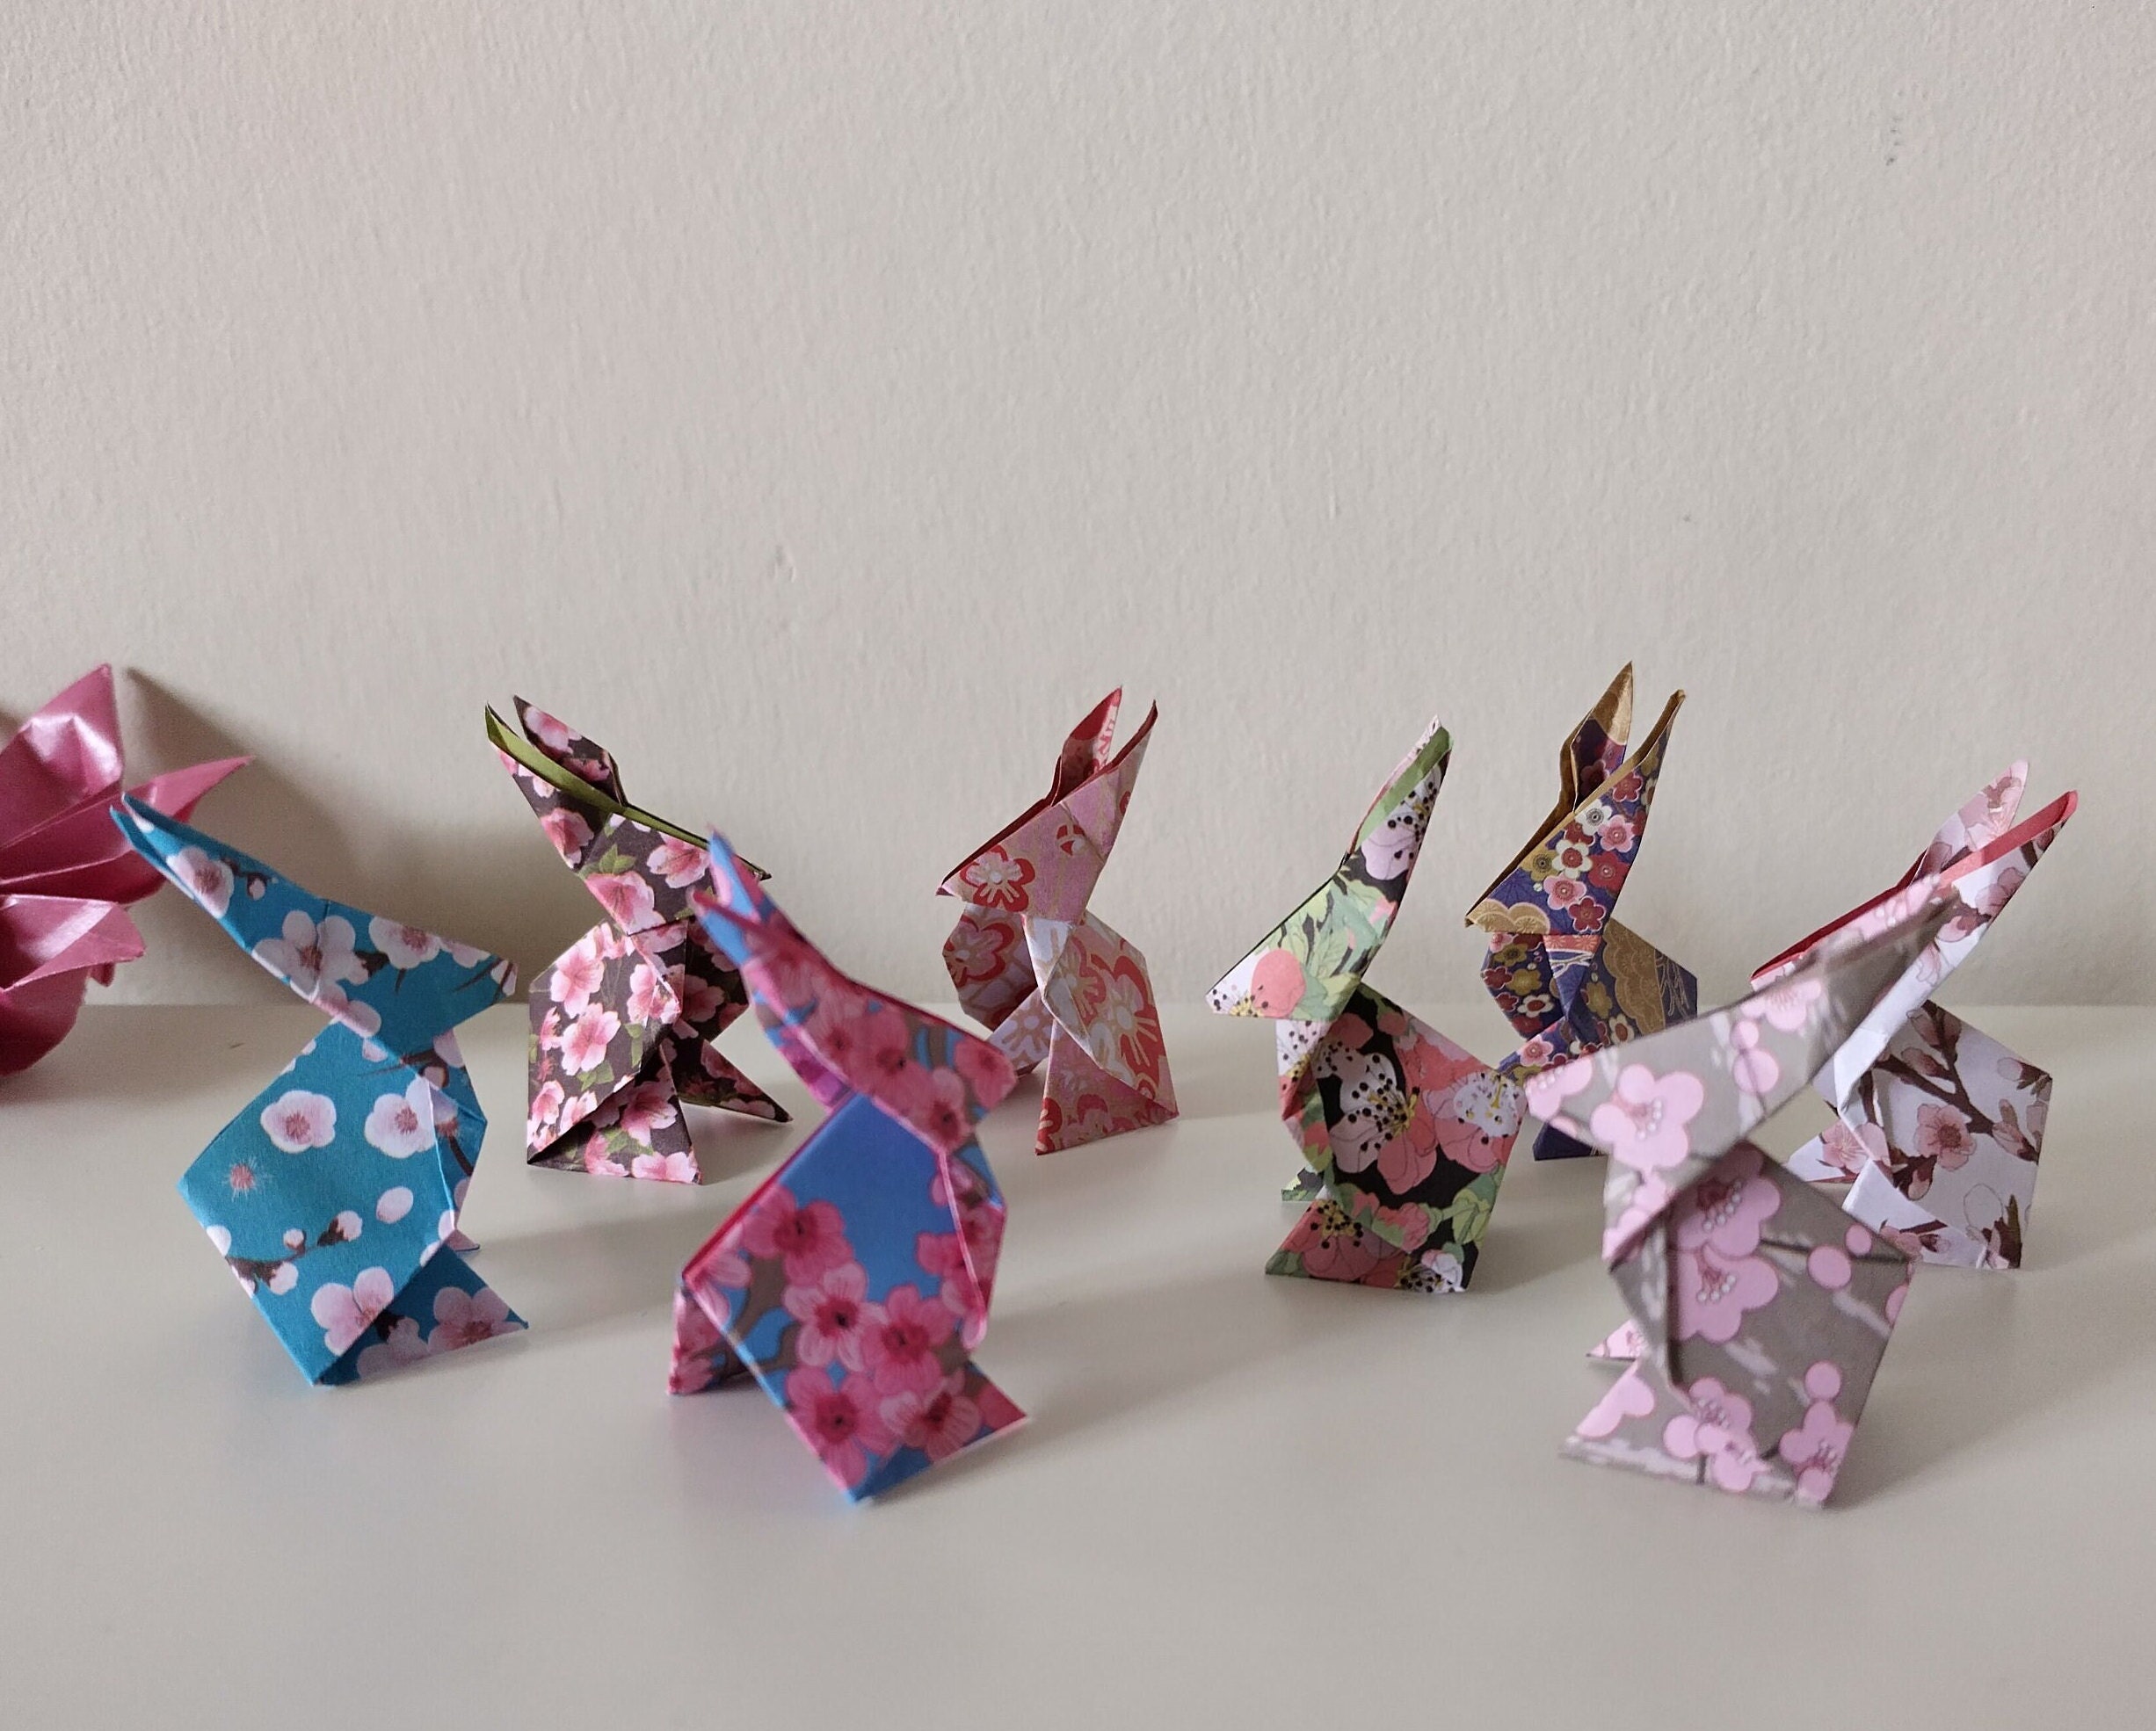 Japanese Sakura Foil Print Chiyogami Origami Paper 14 Sheets 5.9 X